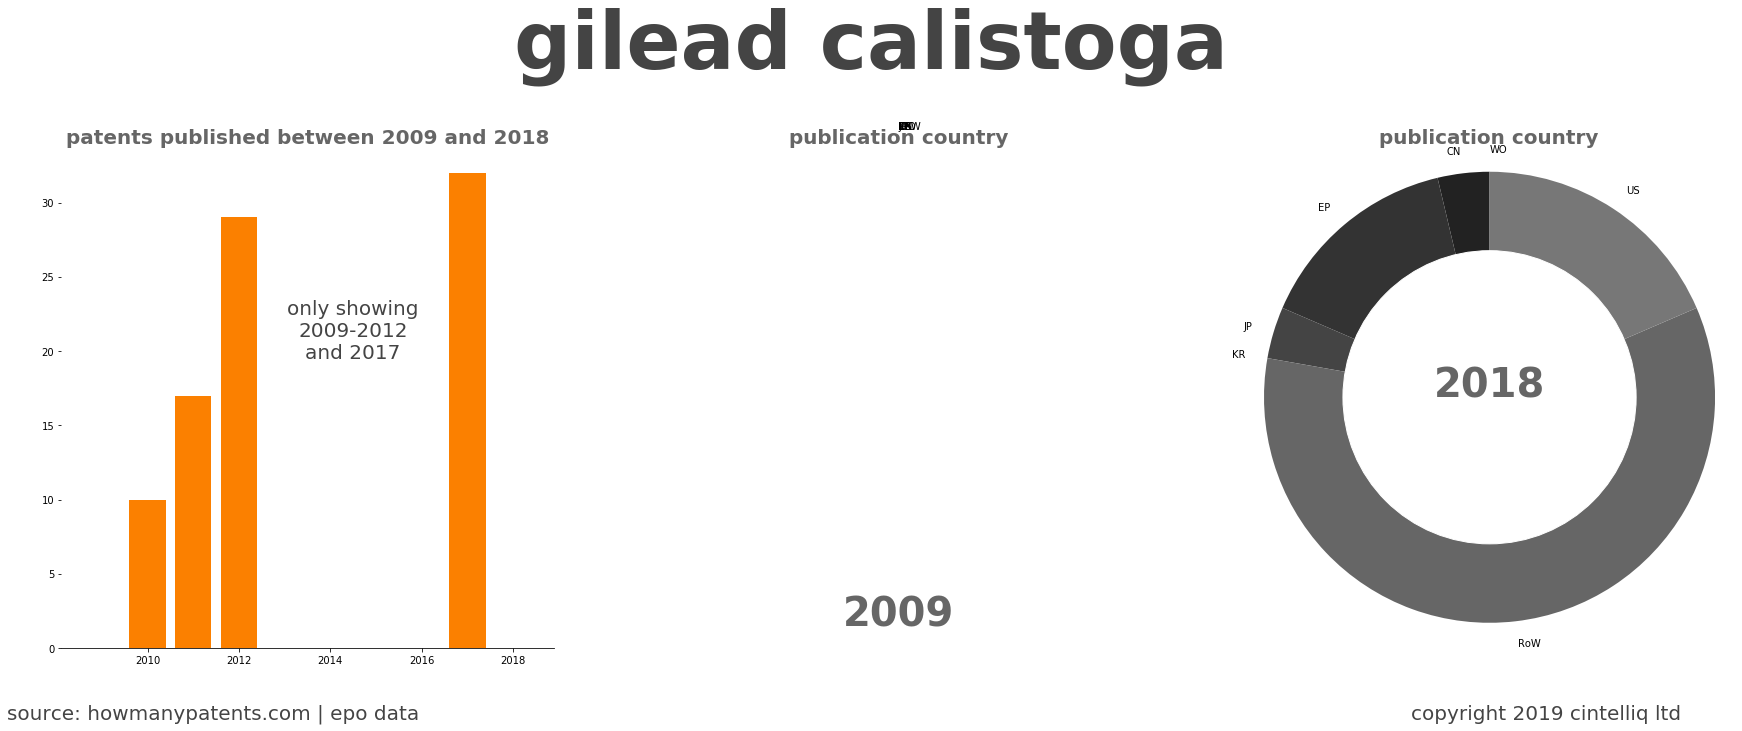 summary of patents for Gilead Calistoga